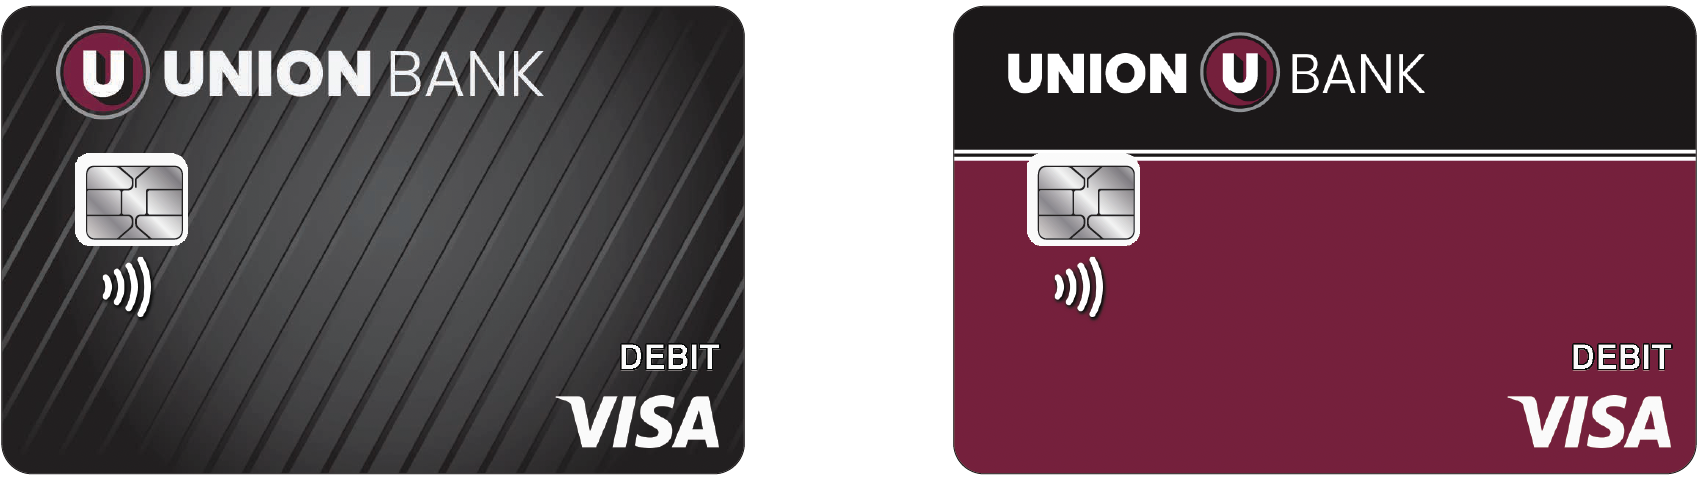 Debit card designs